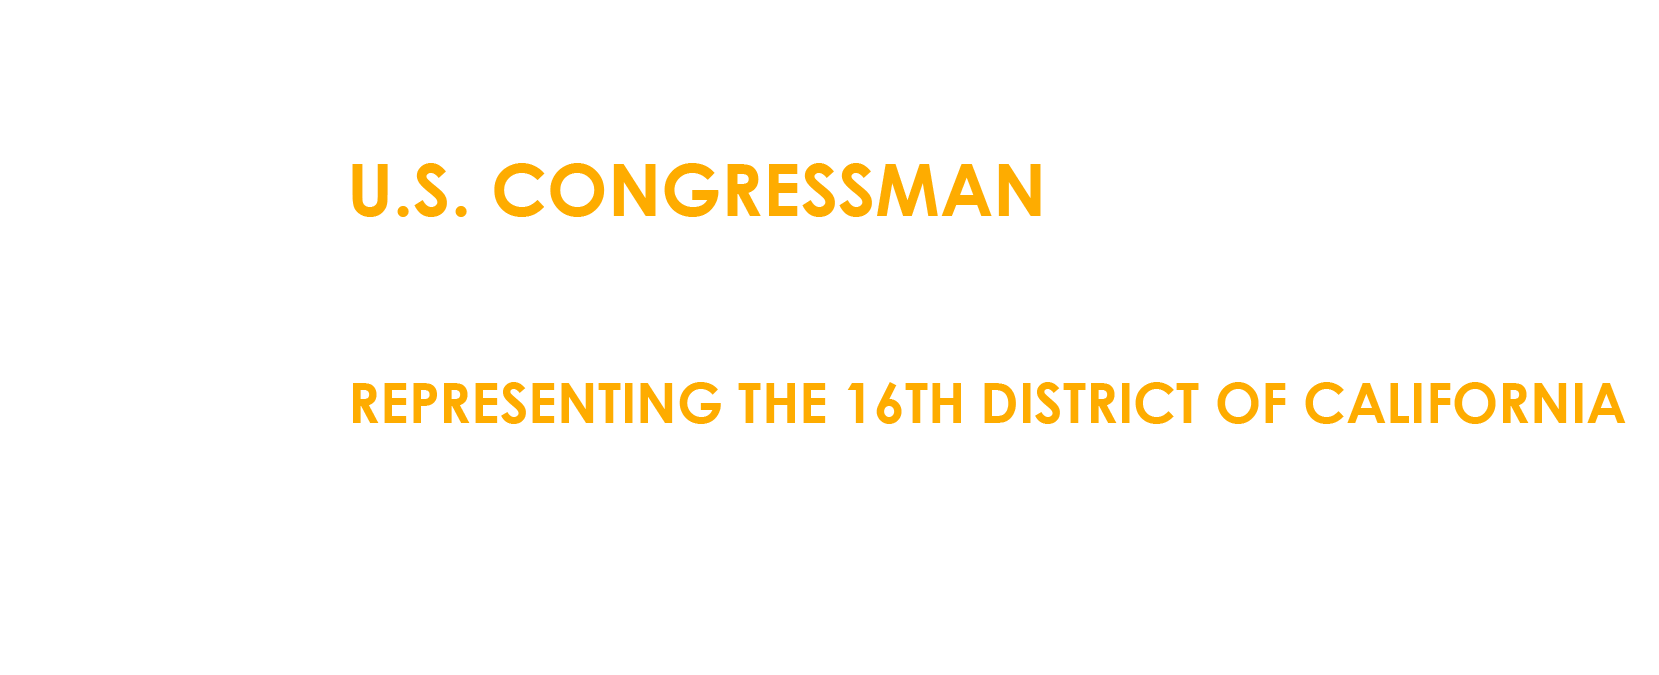 Congressman Jim Costa